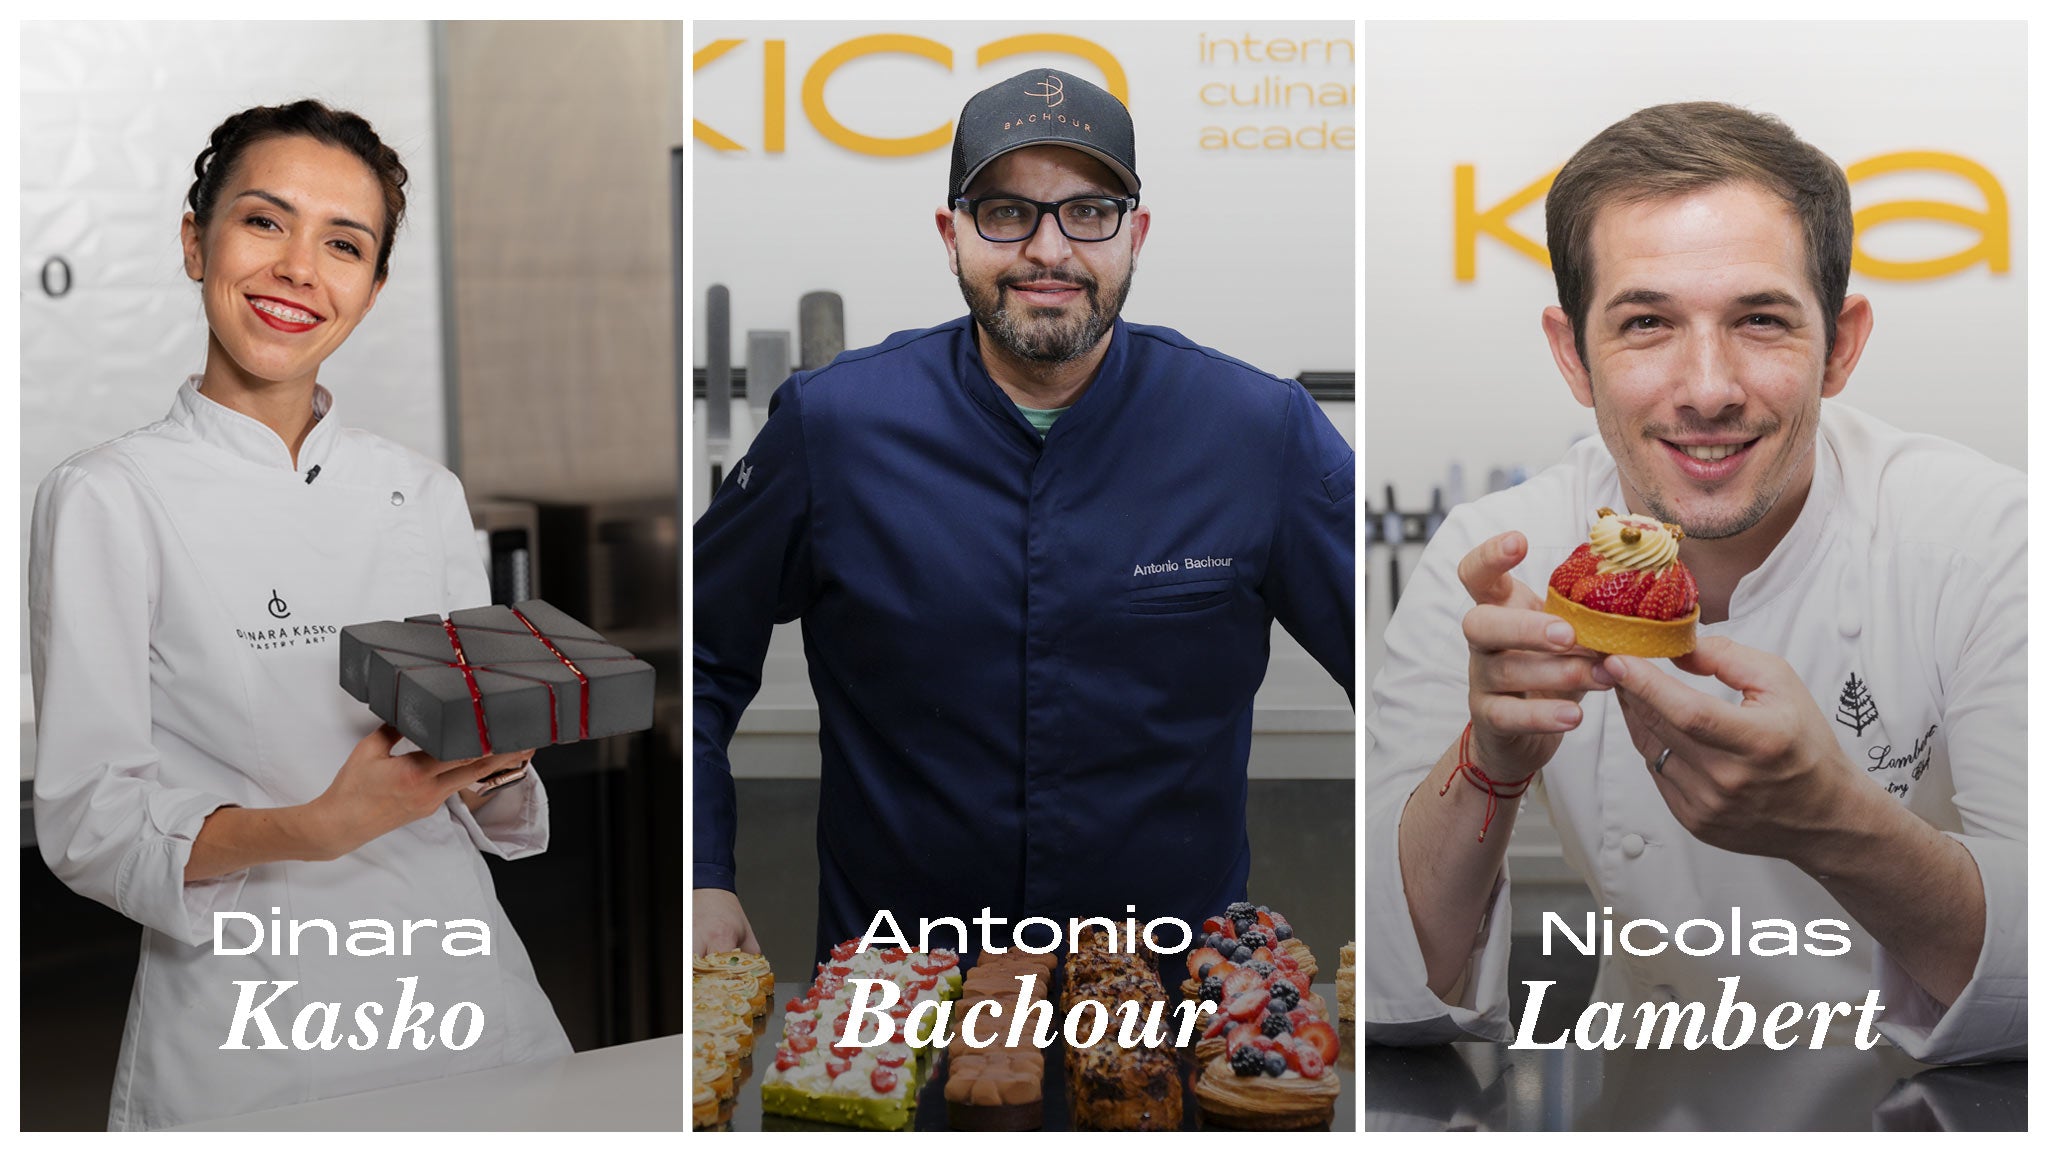 Photo of three chefs: Dinara Kasko, Antonio Bachour, and Nicolas Lambert - KICA books